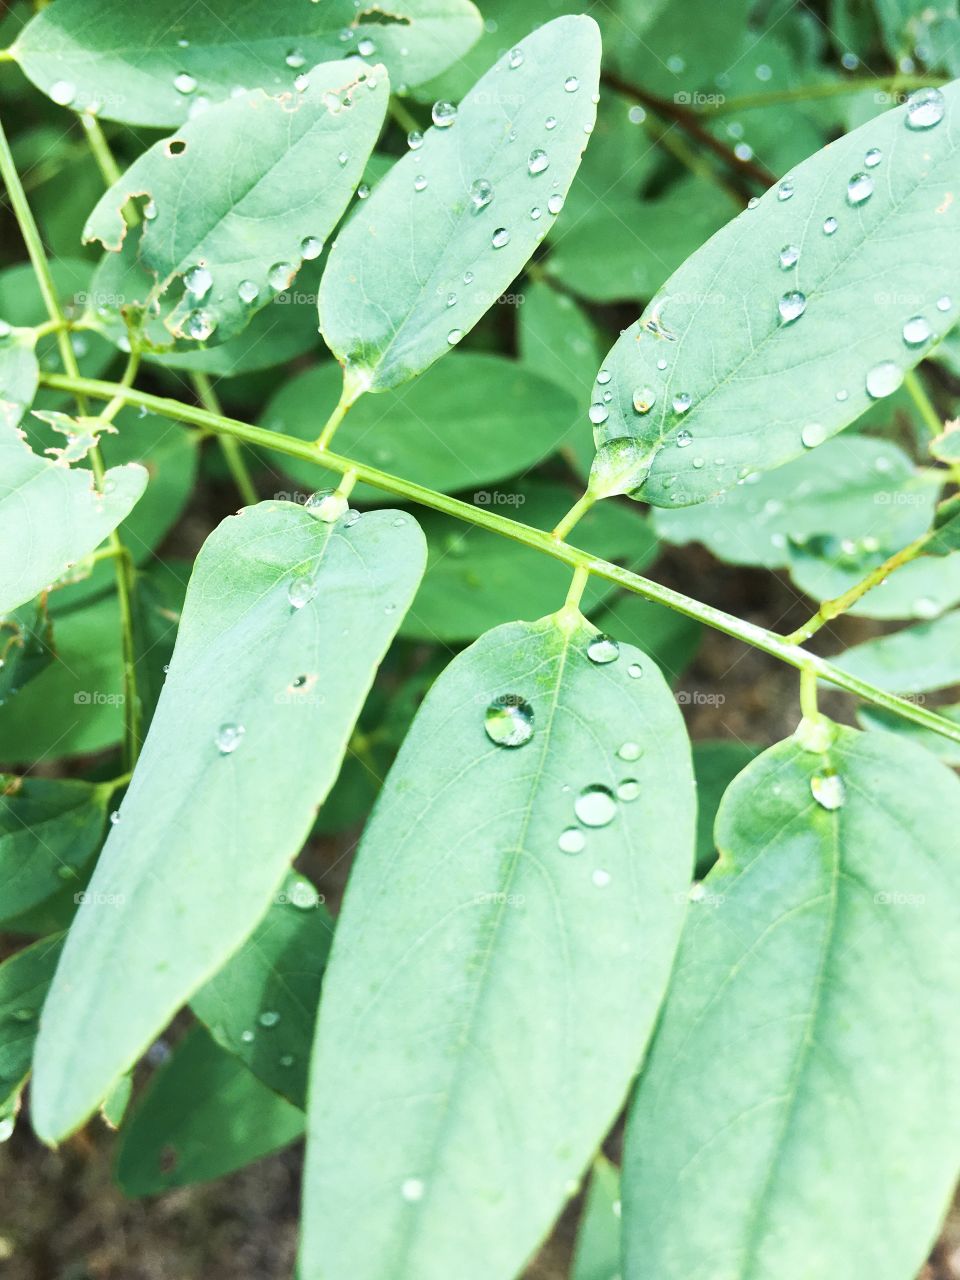 The rain drops on green leaves closeup. 